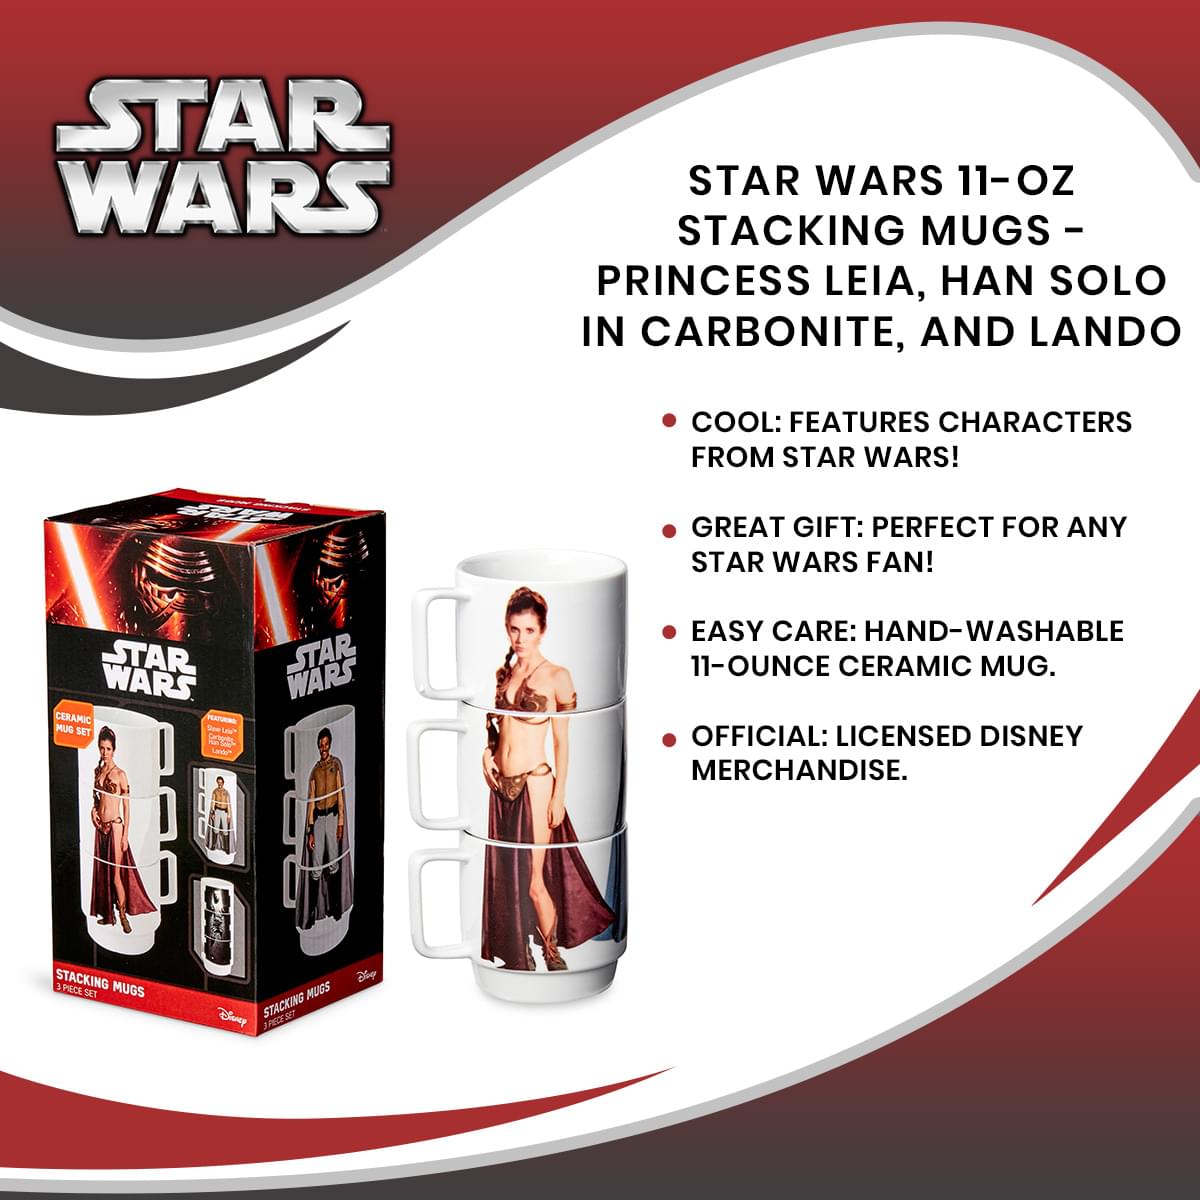 Star Wars 11-Oz Stacking Mugs - Princess Leia, Han Solo in Carbonite, and Lando